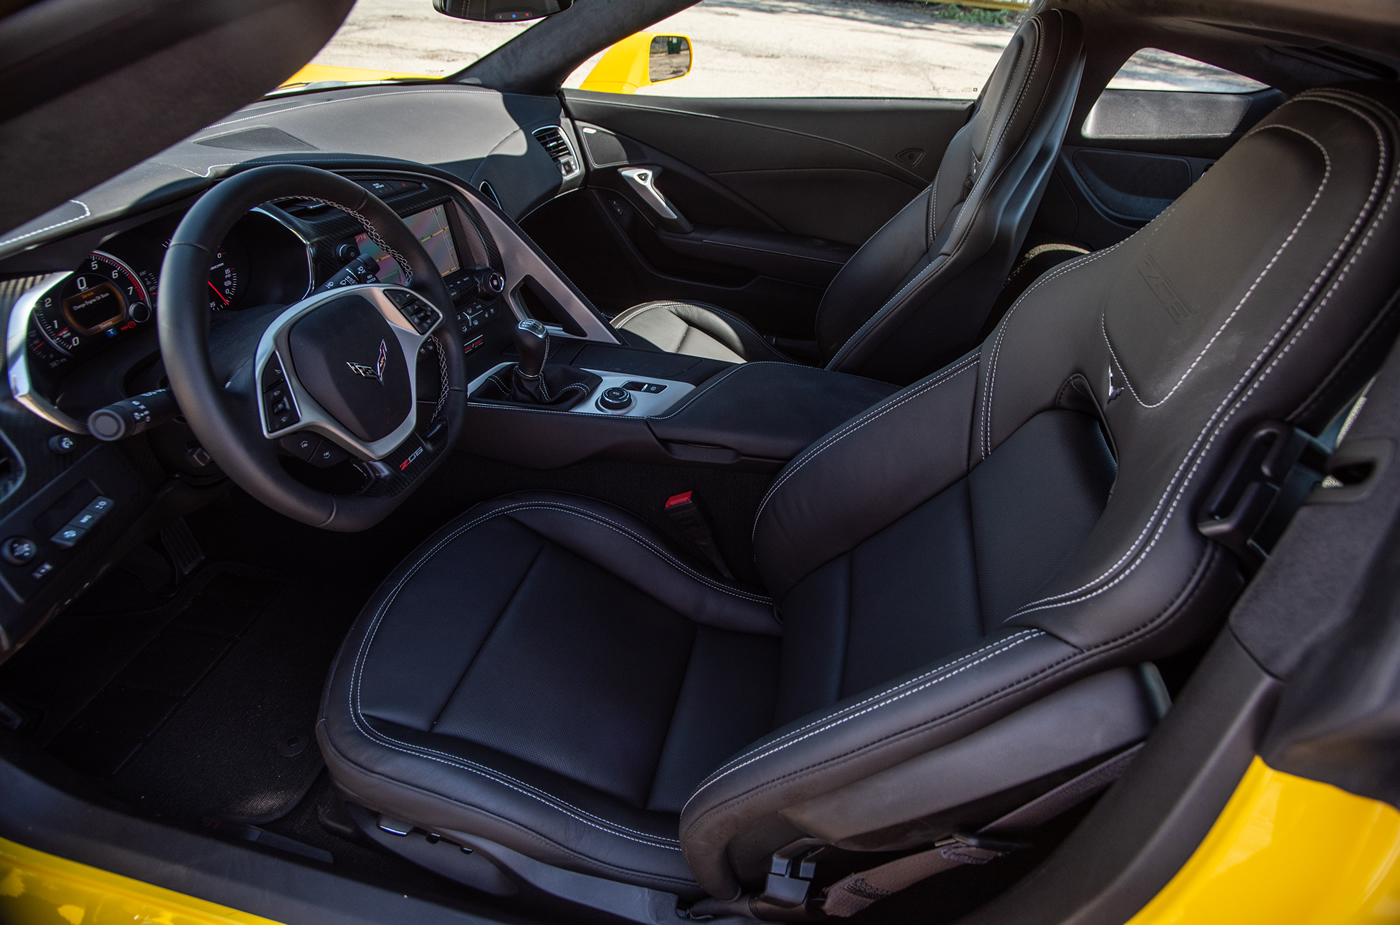 2015 Corvette Z06 Coupe 3LZ Z07 7-Speed in Velocity Yellow